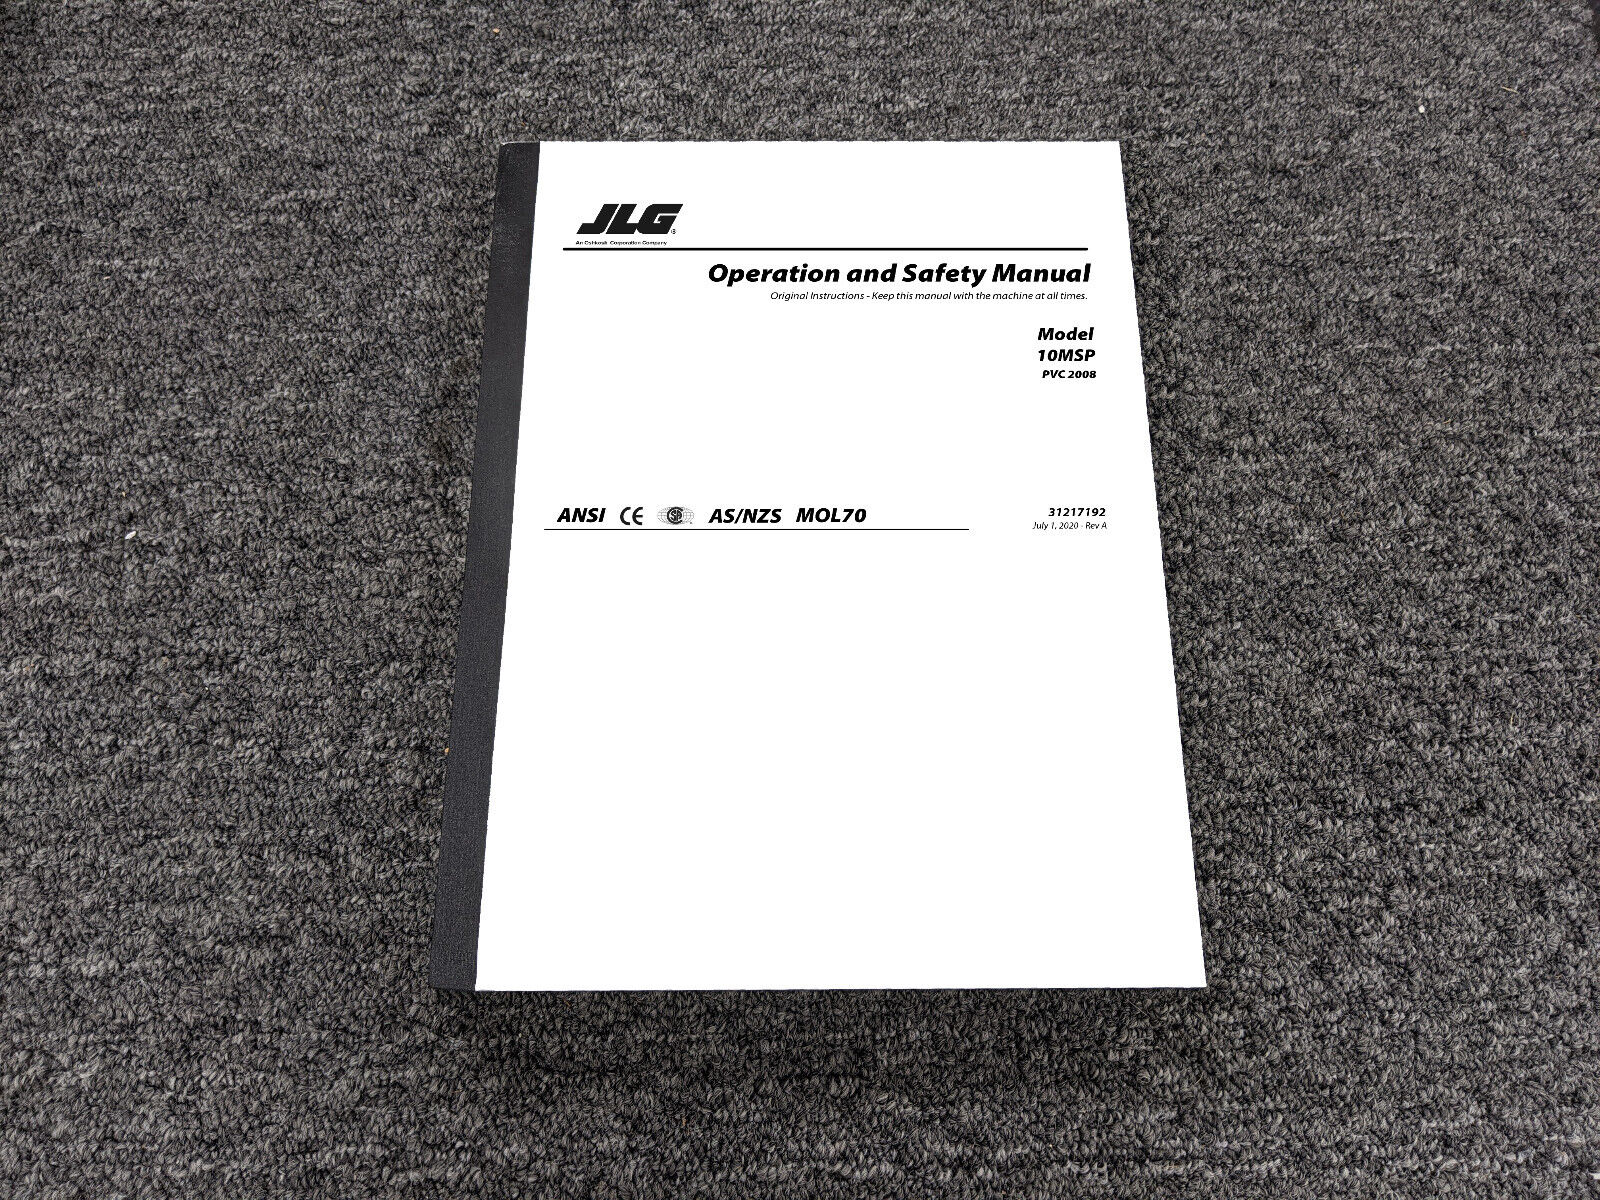 JLG 10MSP Stock Picker Safety Owner Operator Manual User Guide PVC2008 31217192